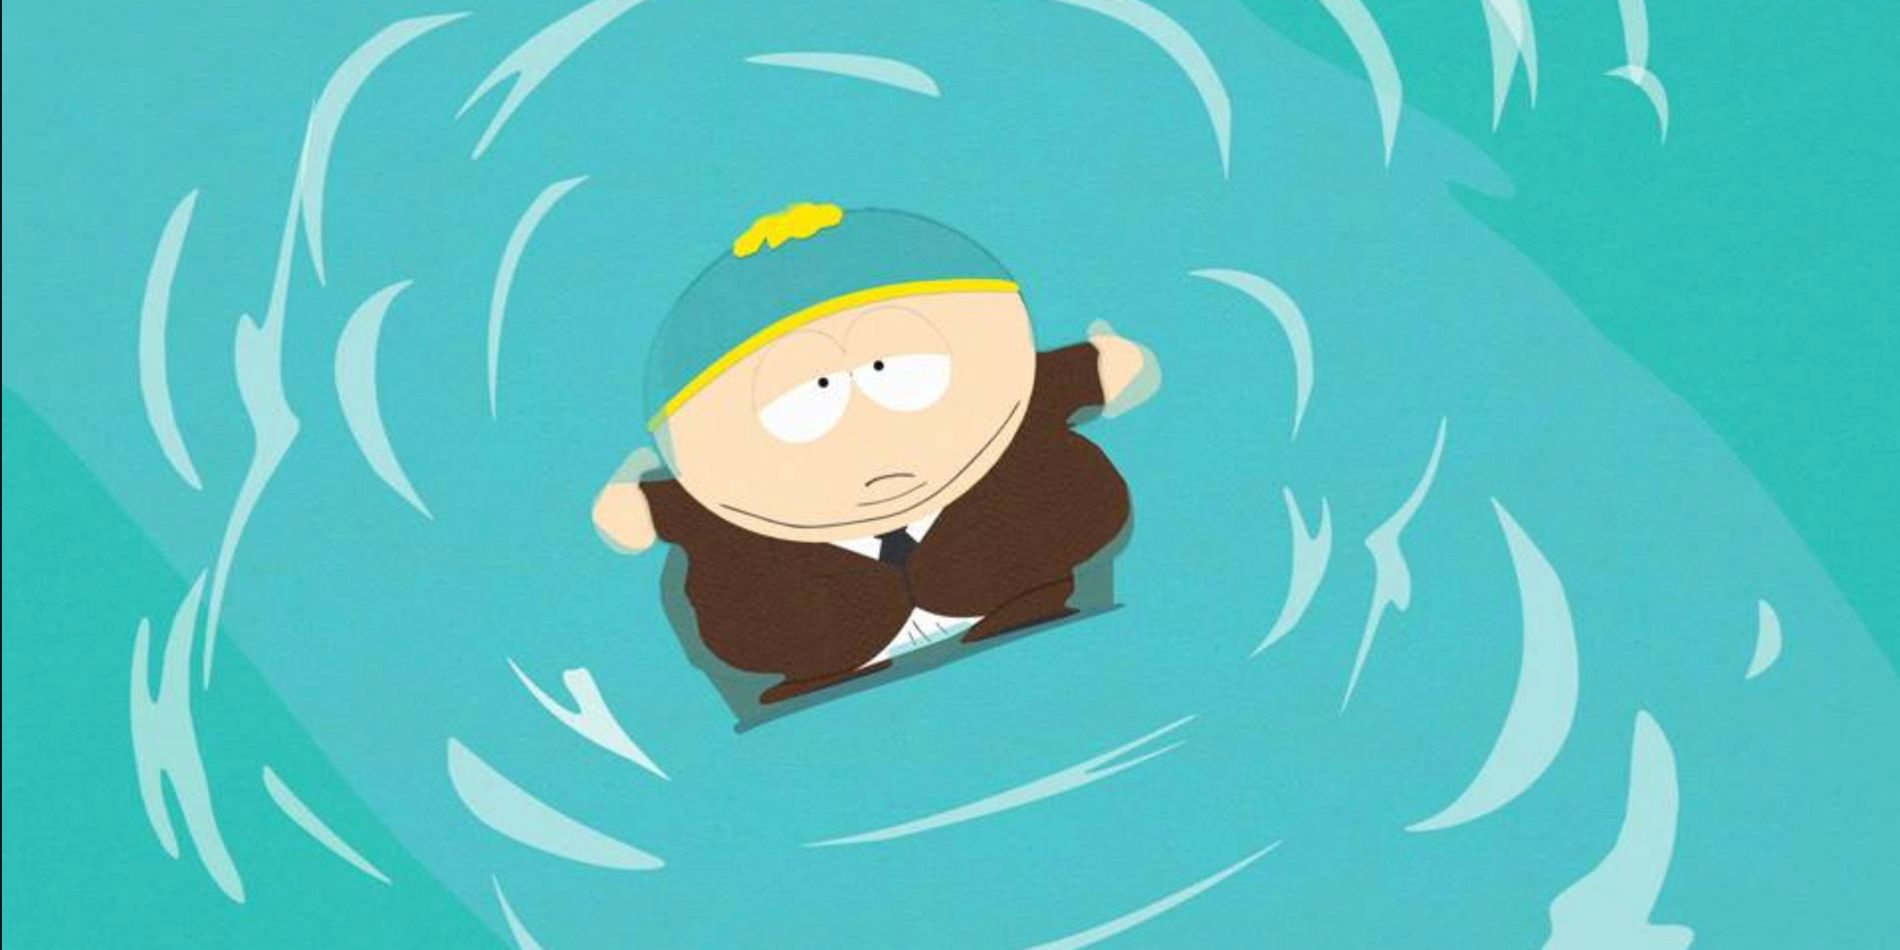 Cartman floats in the water at Casa Bonita in South Park